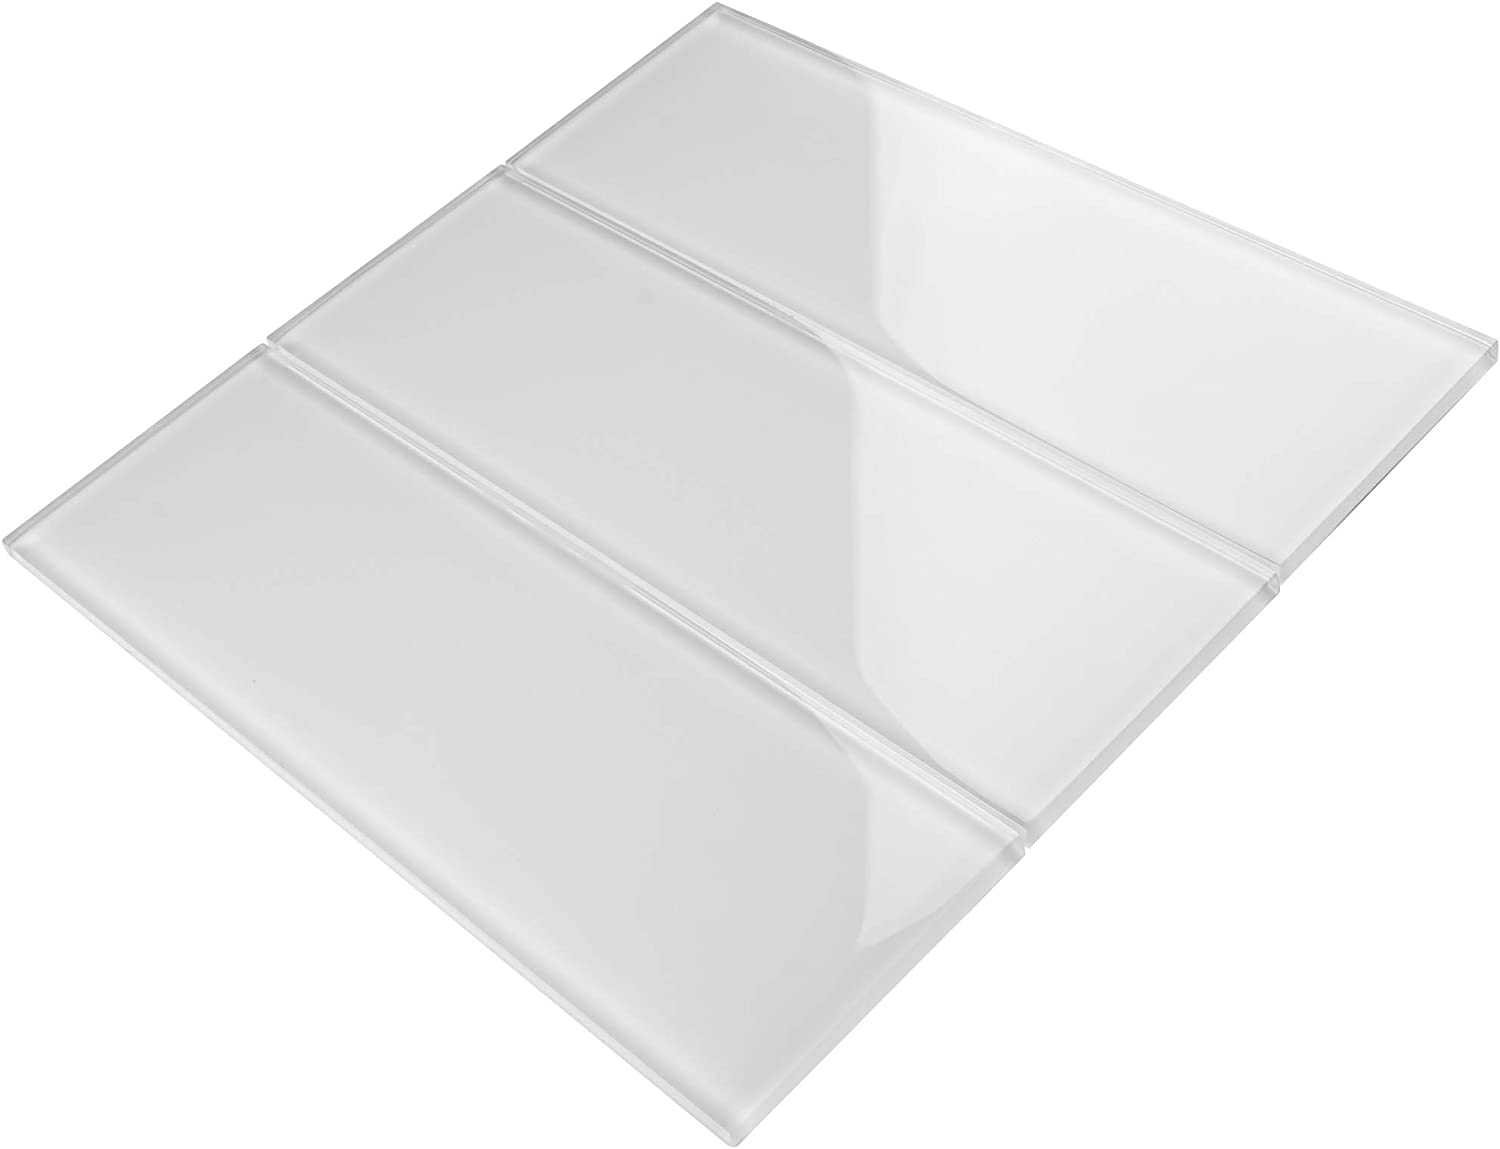 4x12 Glossy White Subway Glass Mosaic Tiles for Bathroom and Kitchen Walls Kitchen Backsplashes